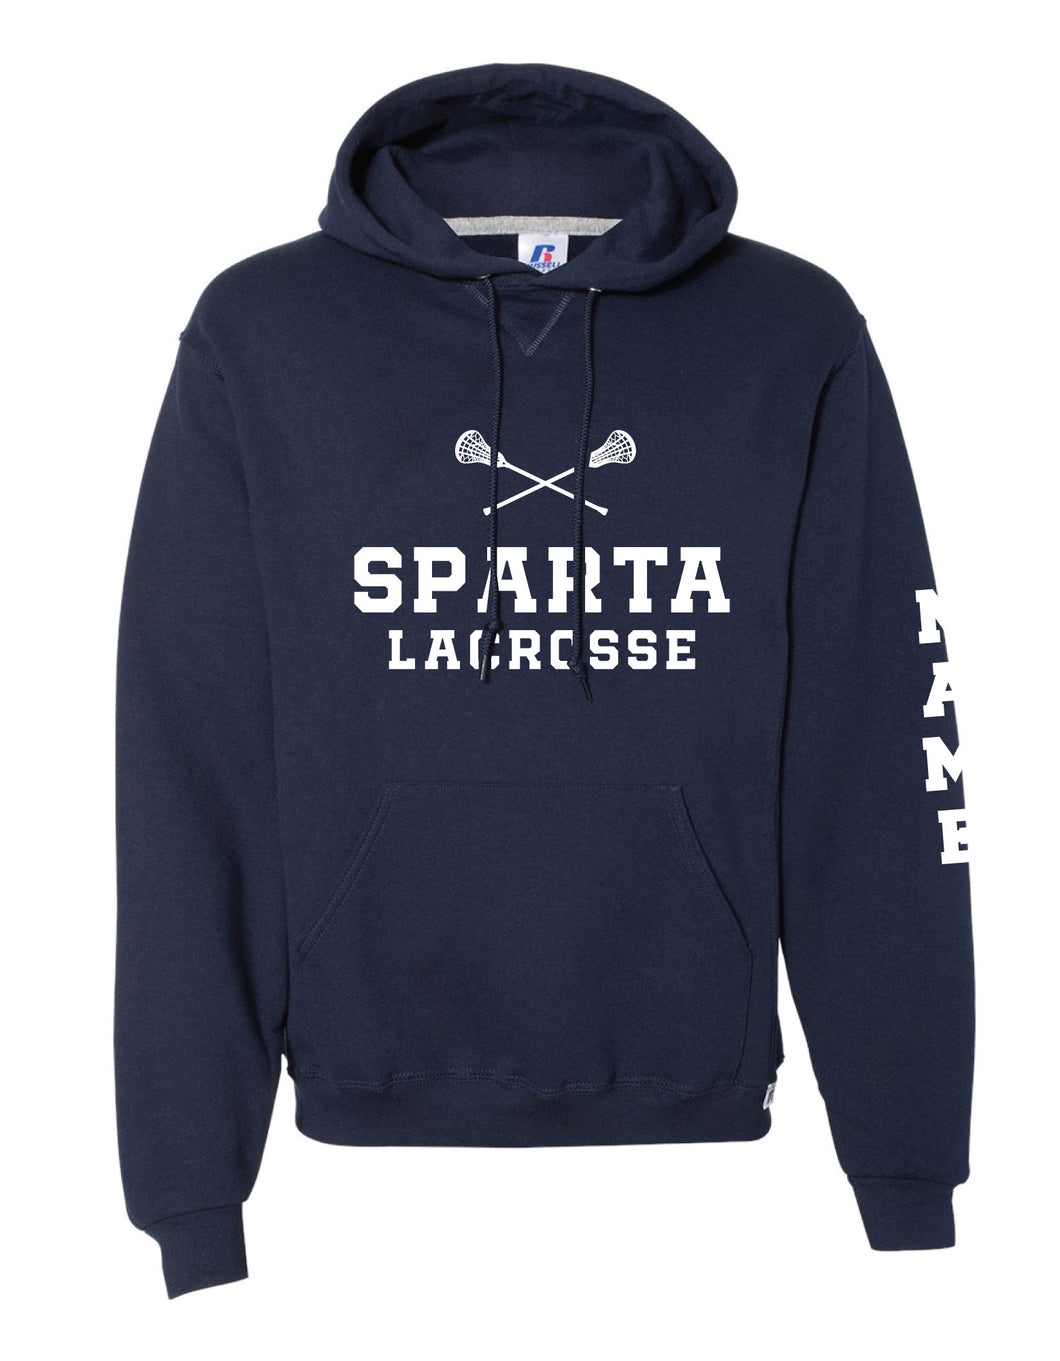 Sparta Lacrosse Russell Athletic Cotton Hoodie - Navy - 5KounT